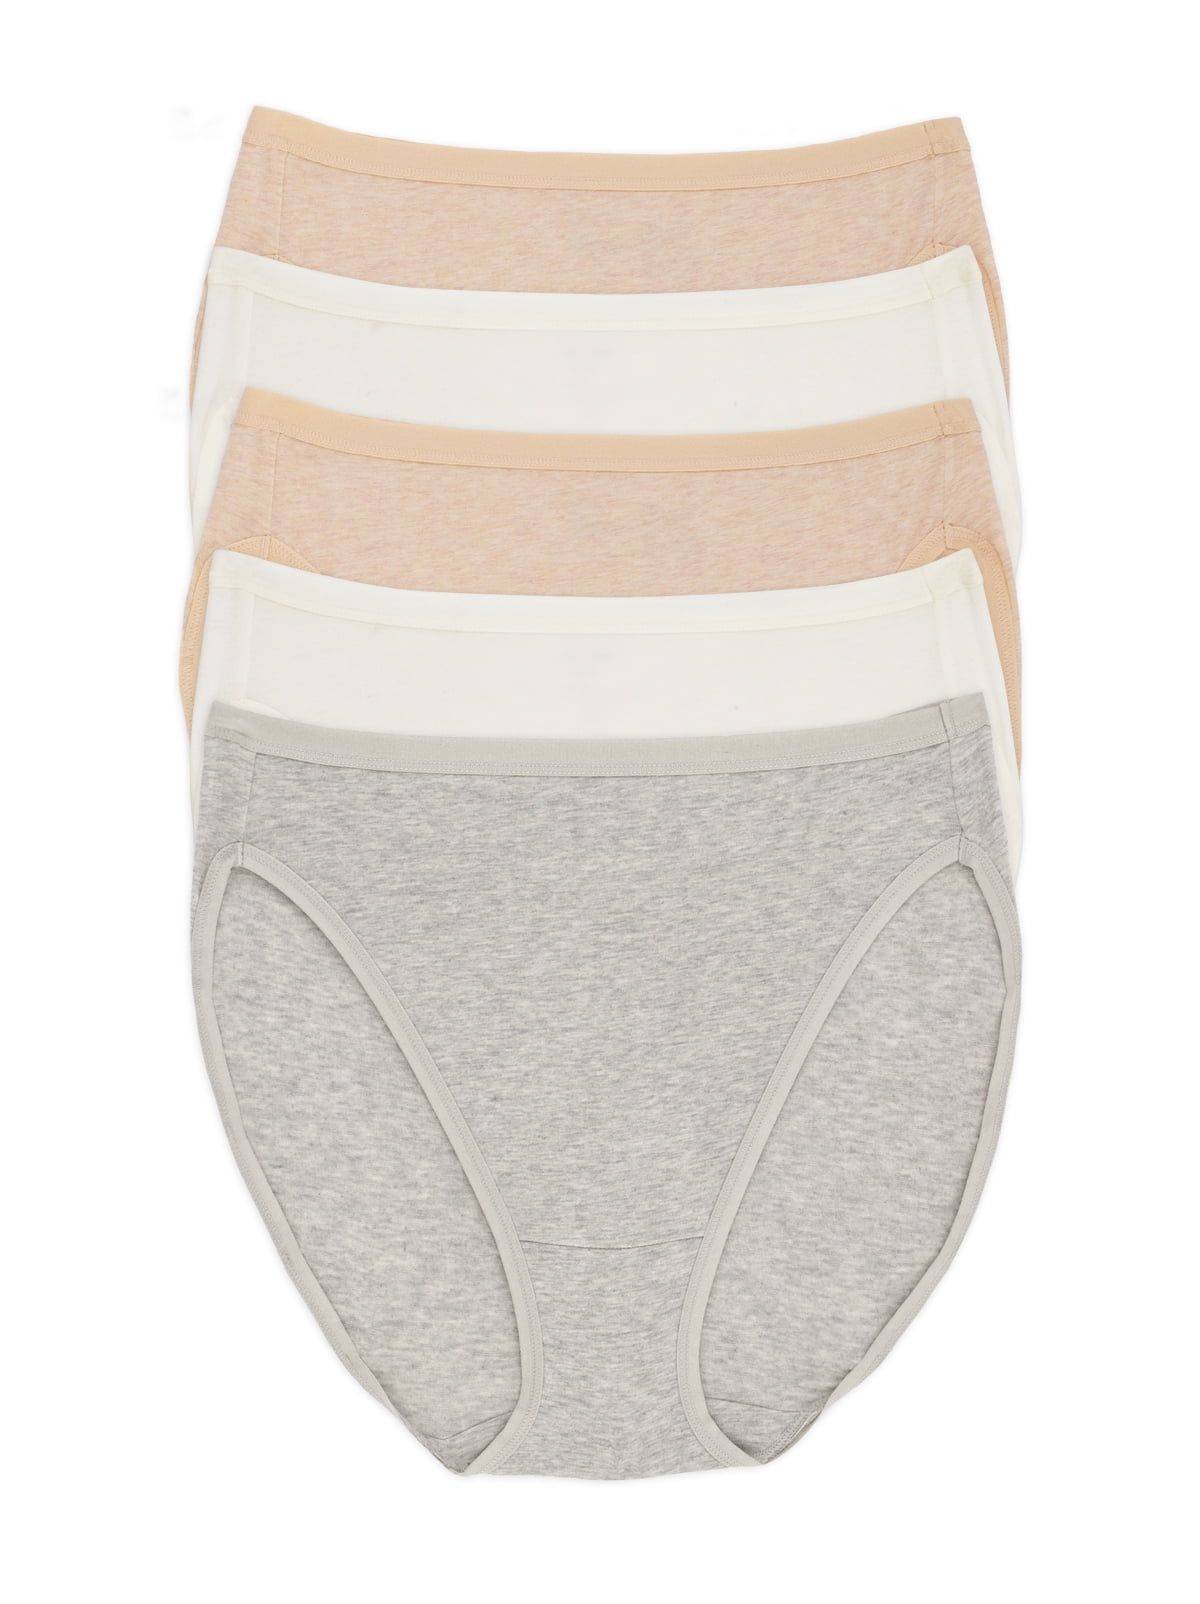 Organic Cotton Stretch Hi Cut Panty 5-Pack | Felina Women's Underwear  (White Haze, Small)